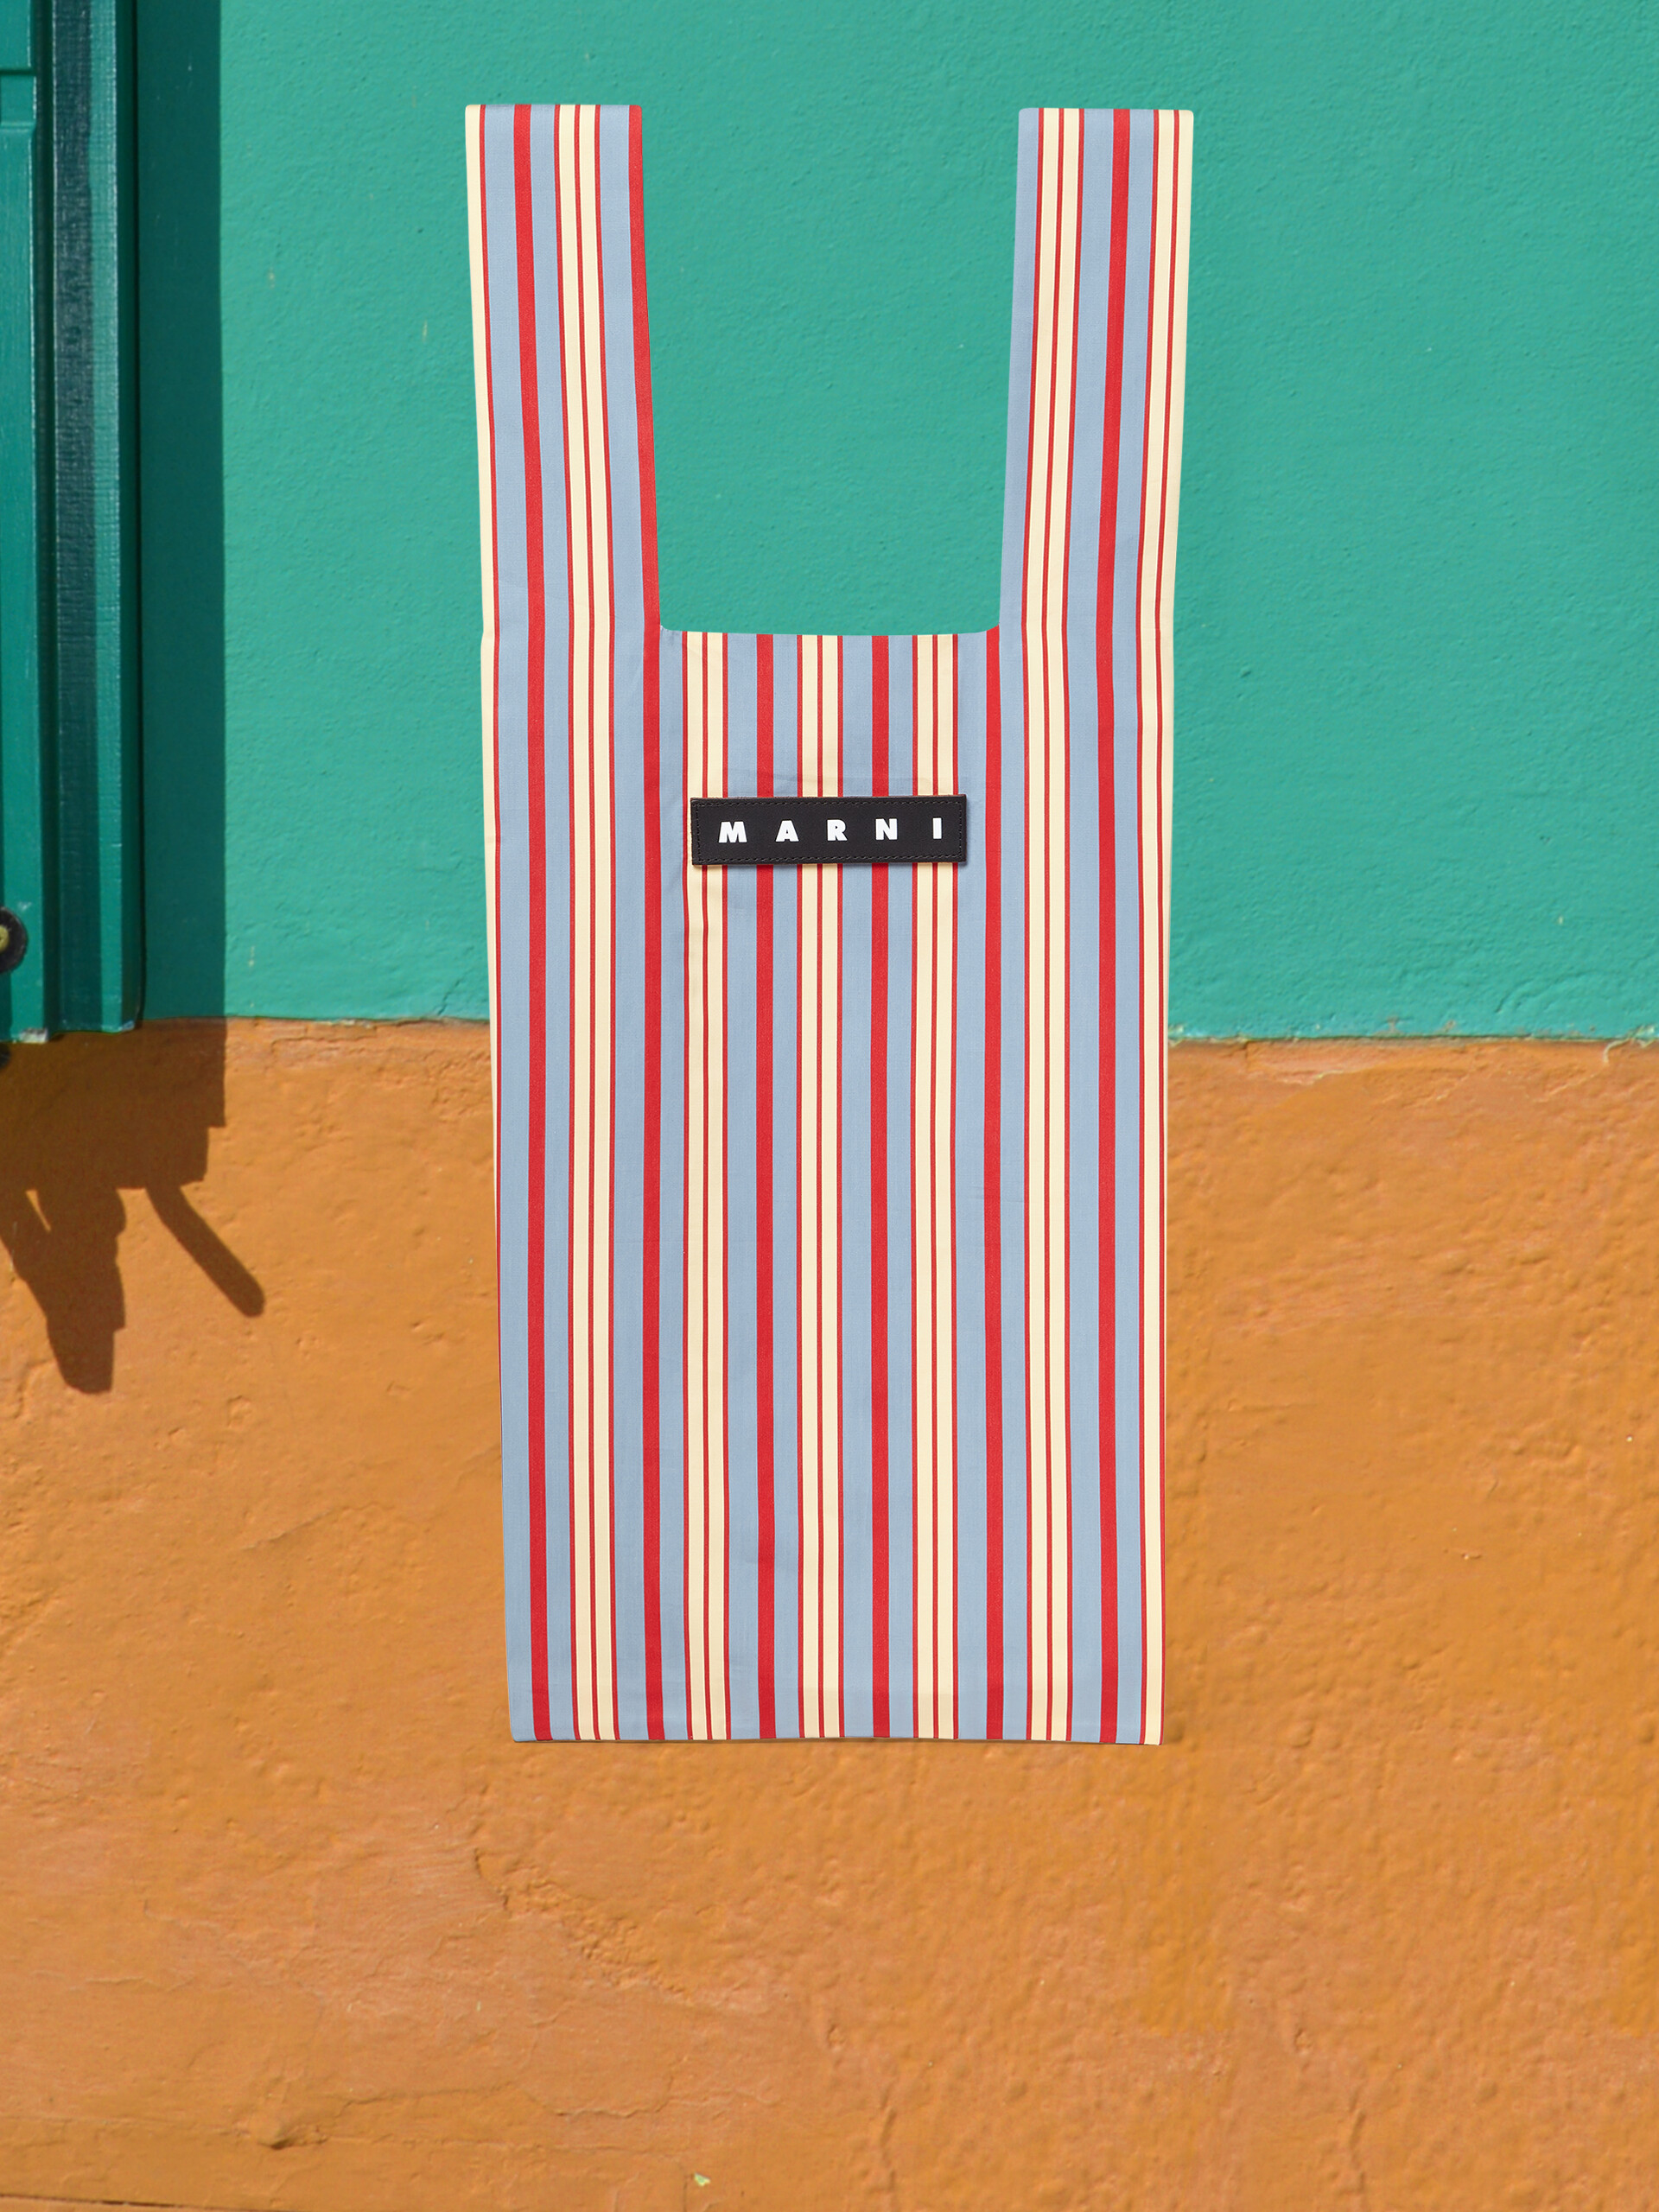 Bolso shopper MARNI MARKET de viscosa con motivo de rayas azul pálido y rojas - Bolsos shopper - Image 1